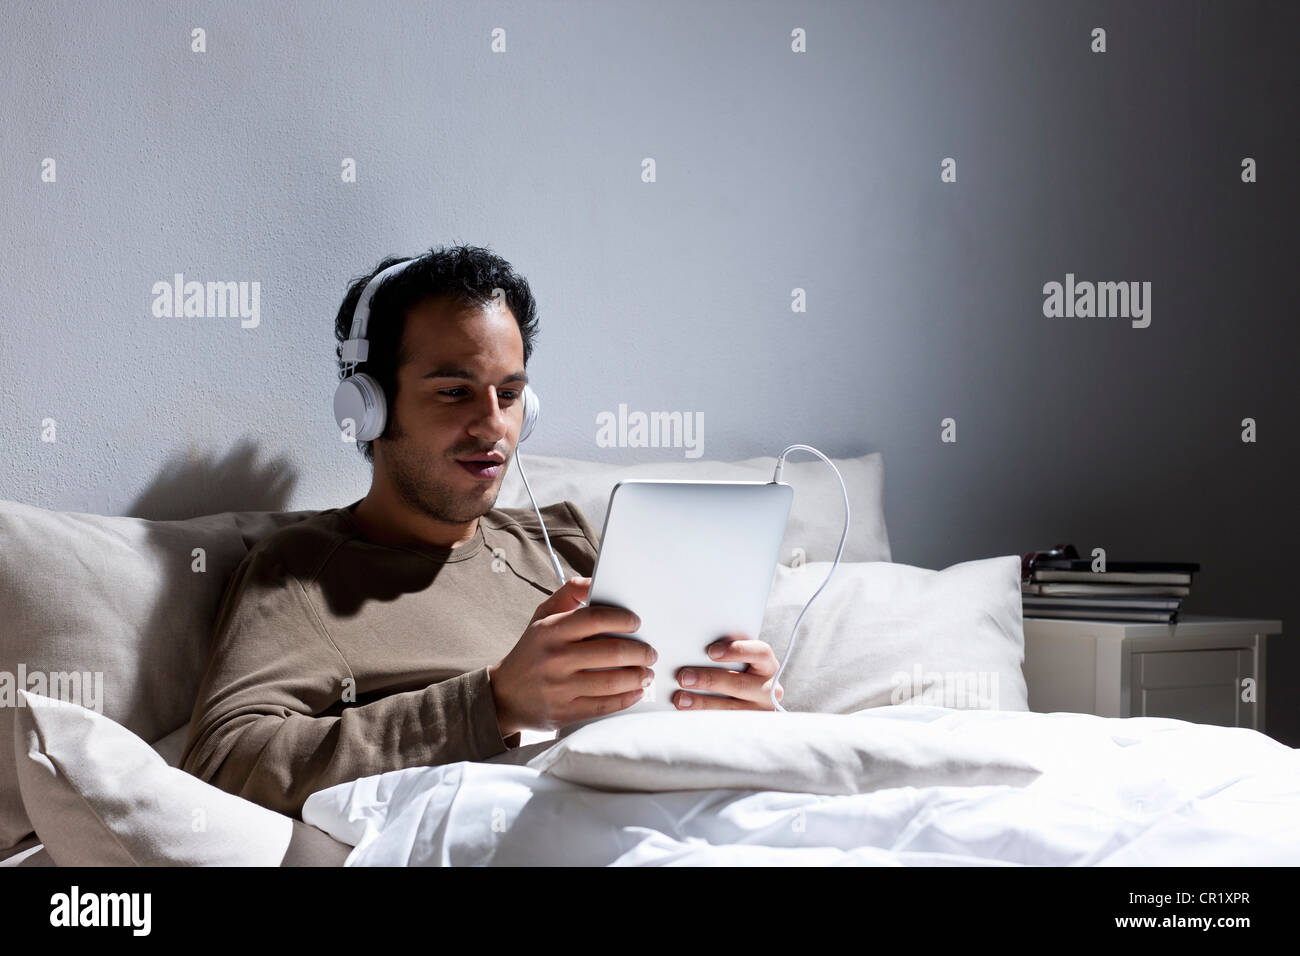 Mann mit Tablet-PC im Bett Stockfotografie - Alamy